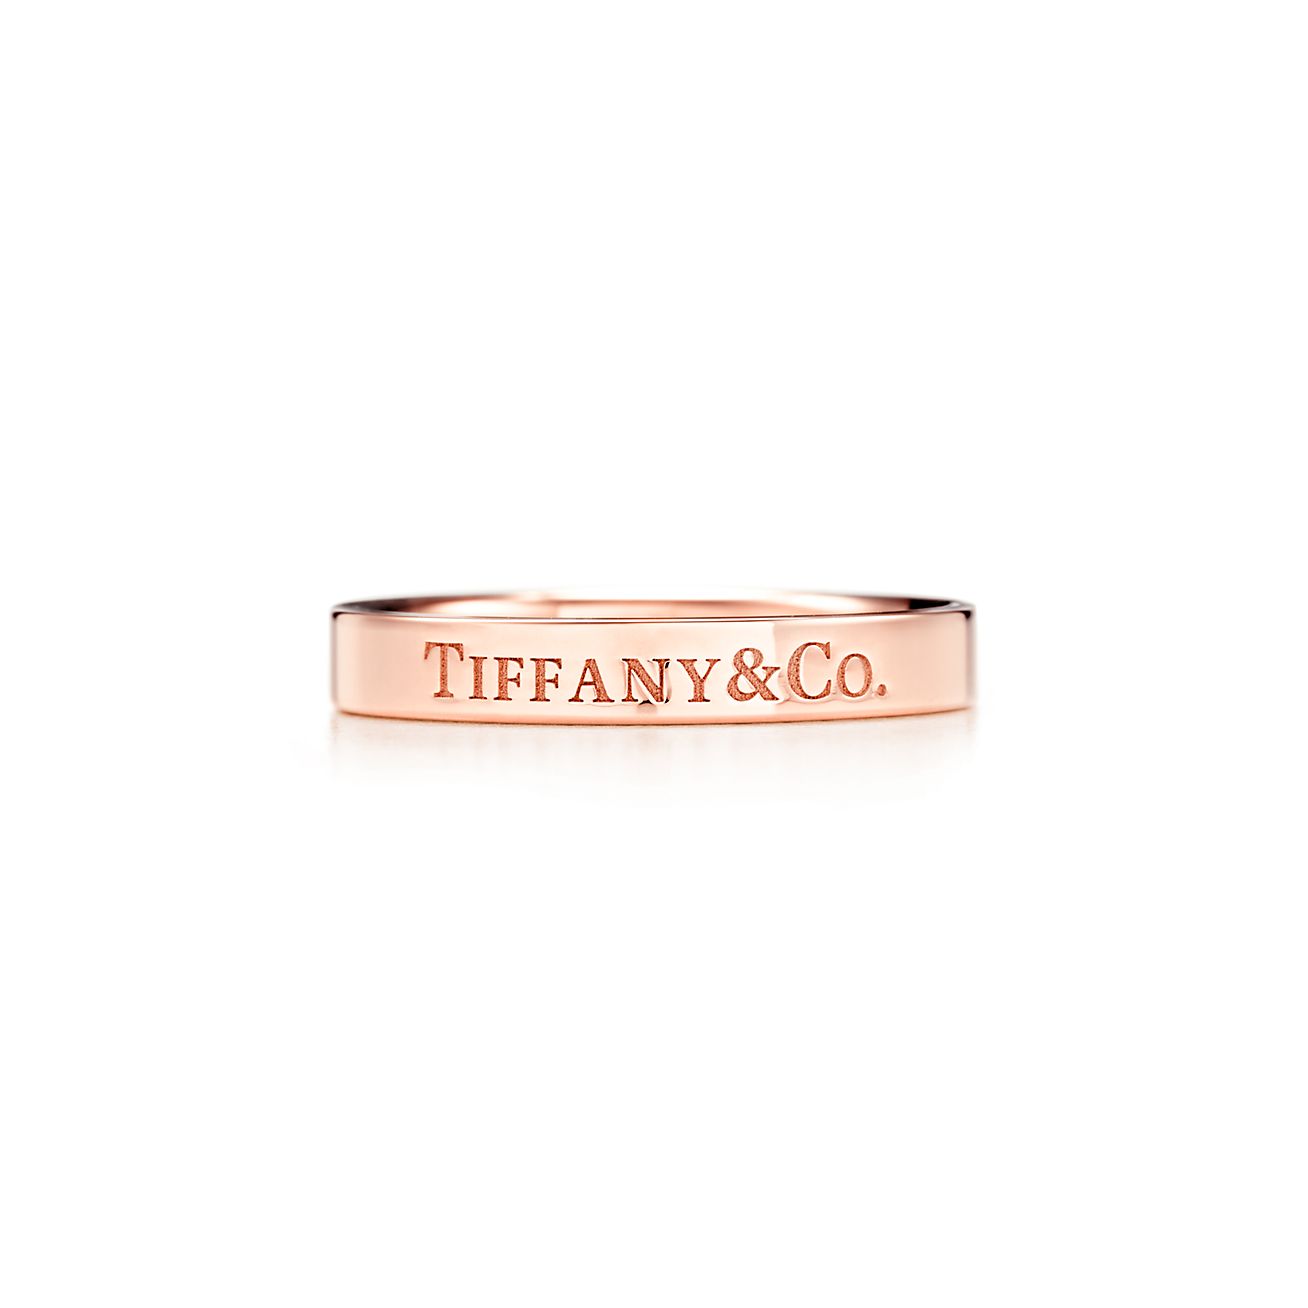 tiffany & co gold ring